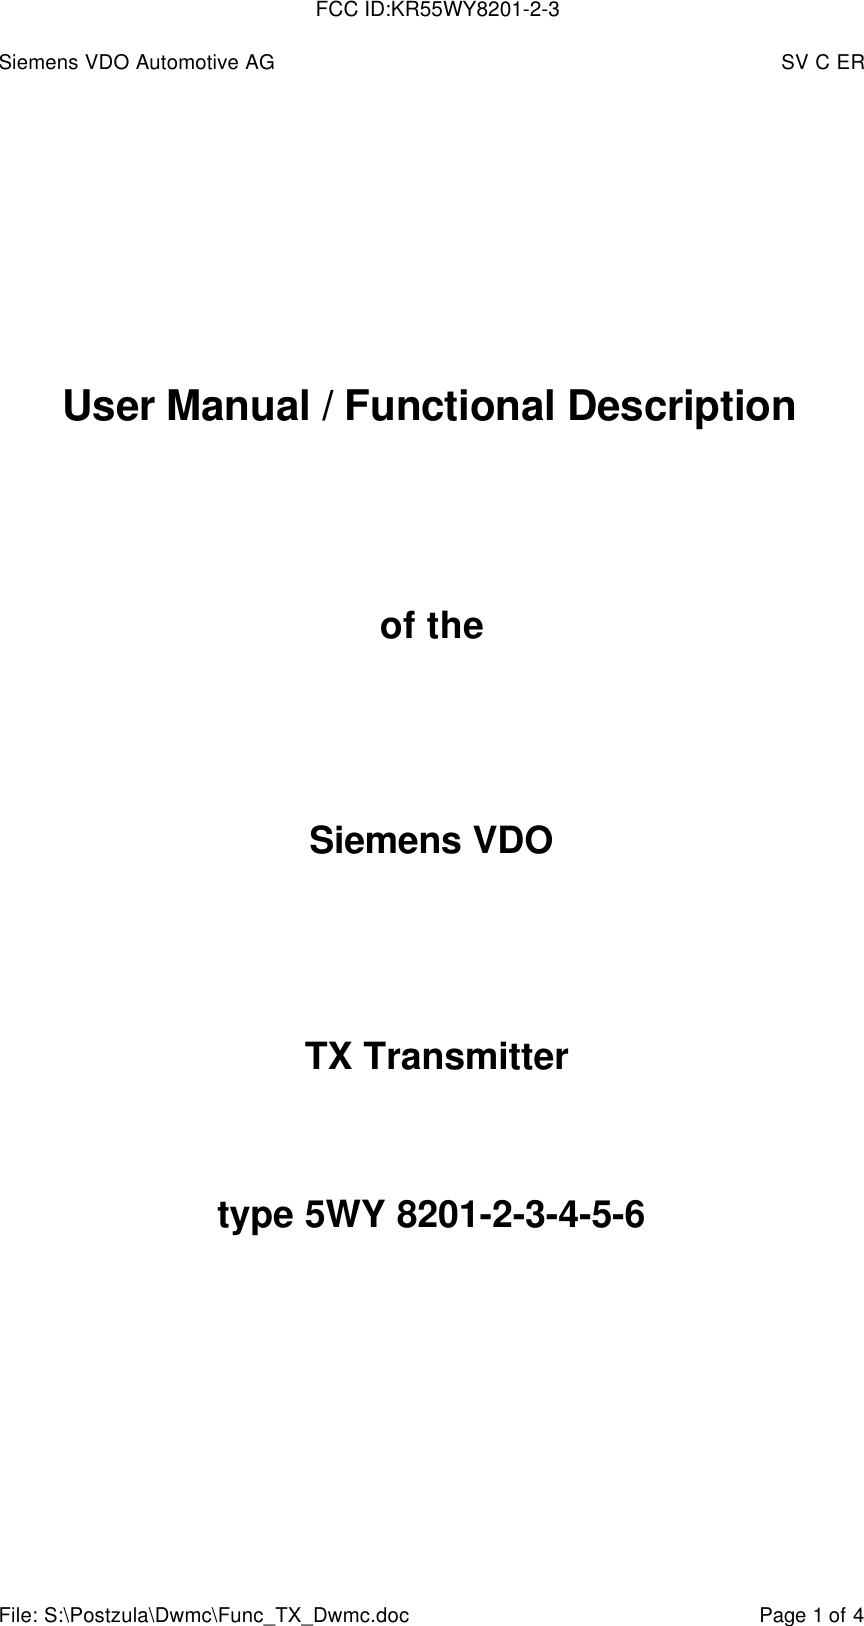 Siemens VDO Automotive AG SV C ERFile: S:\Postzula\Dwmc\Func_TX_Dwmc.doc Page 1 of 4User Manual / Functional Descriptionof theSiemens VDO TX Transmittertype 5WY 8201-2-3-4-5-6FCC ID:KR55WY8201-2-3